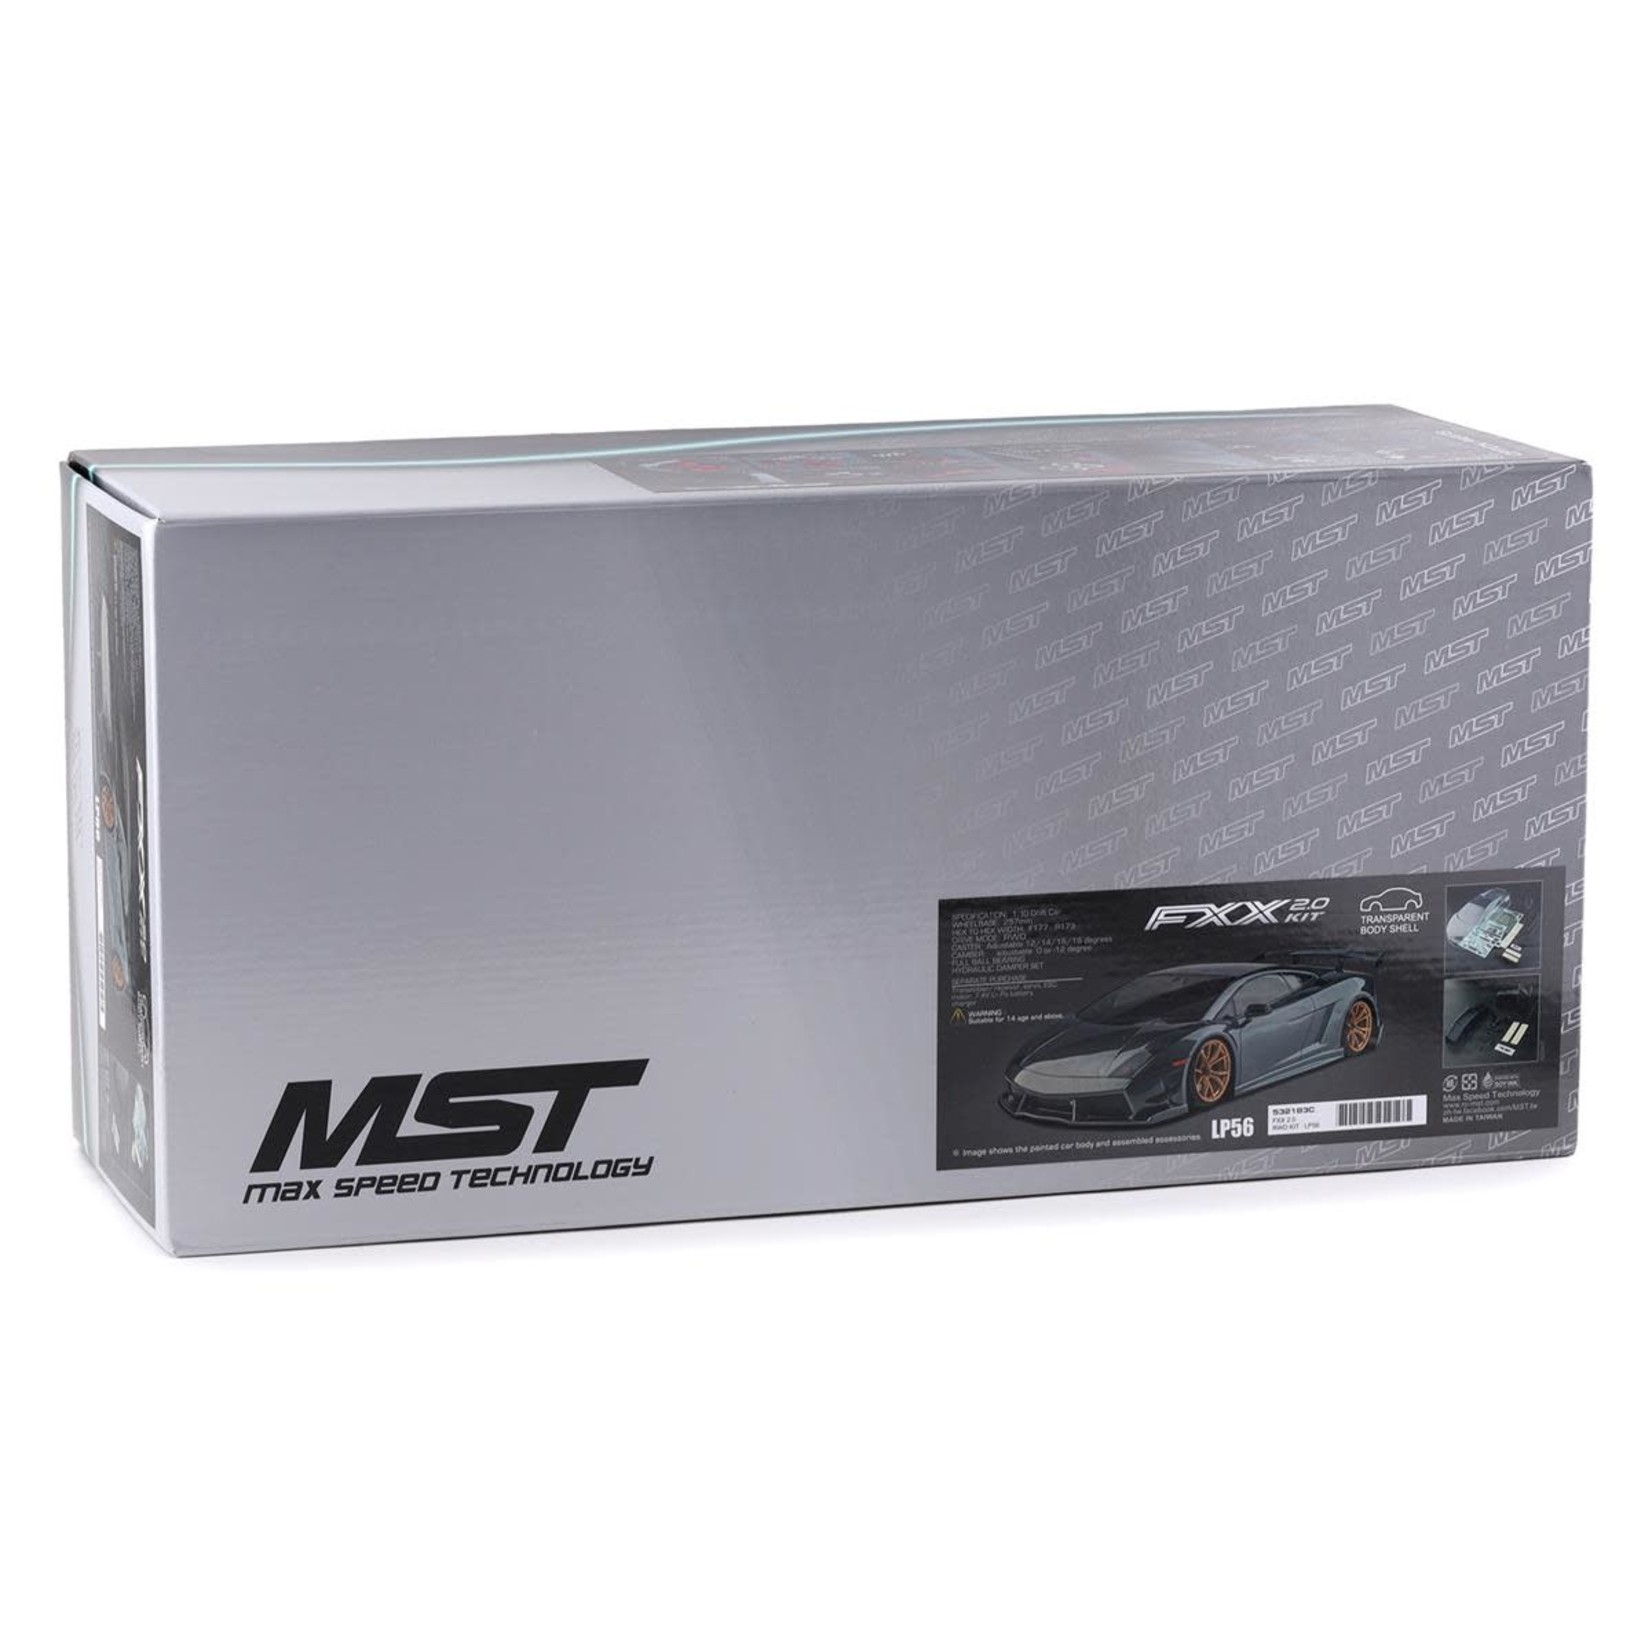 MST MST FXX 2.0 S 1/10 2WD Drift Car Kit w/Clear LP56 Body #532183C